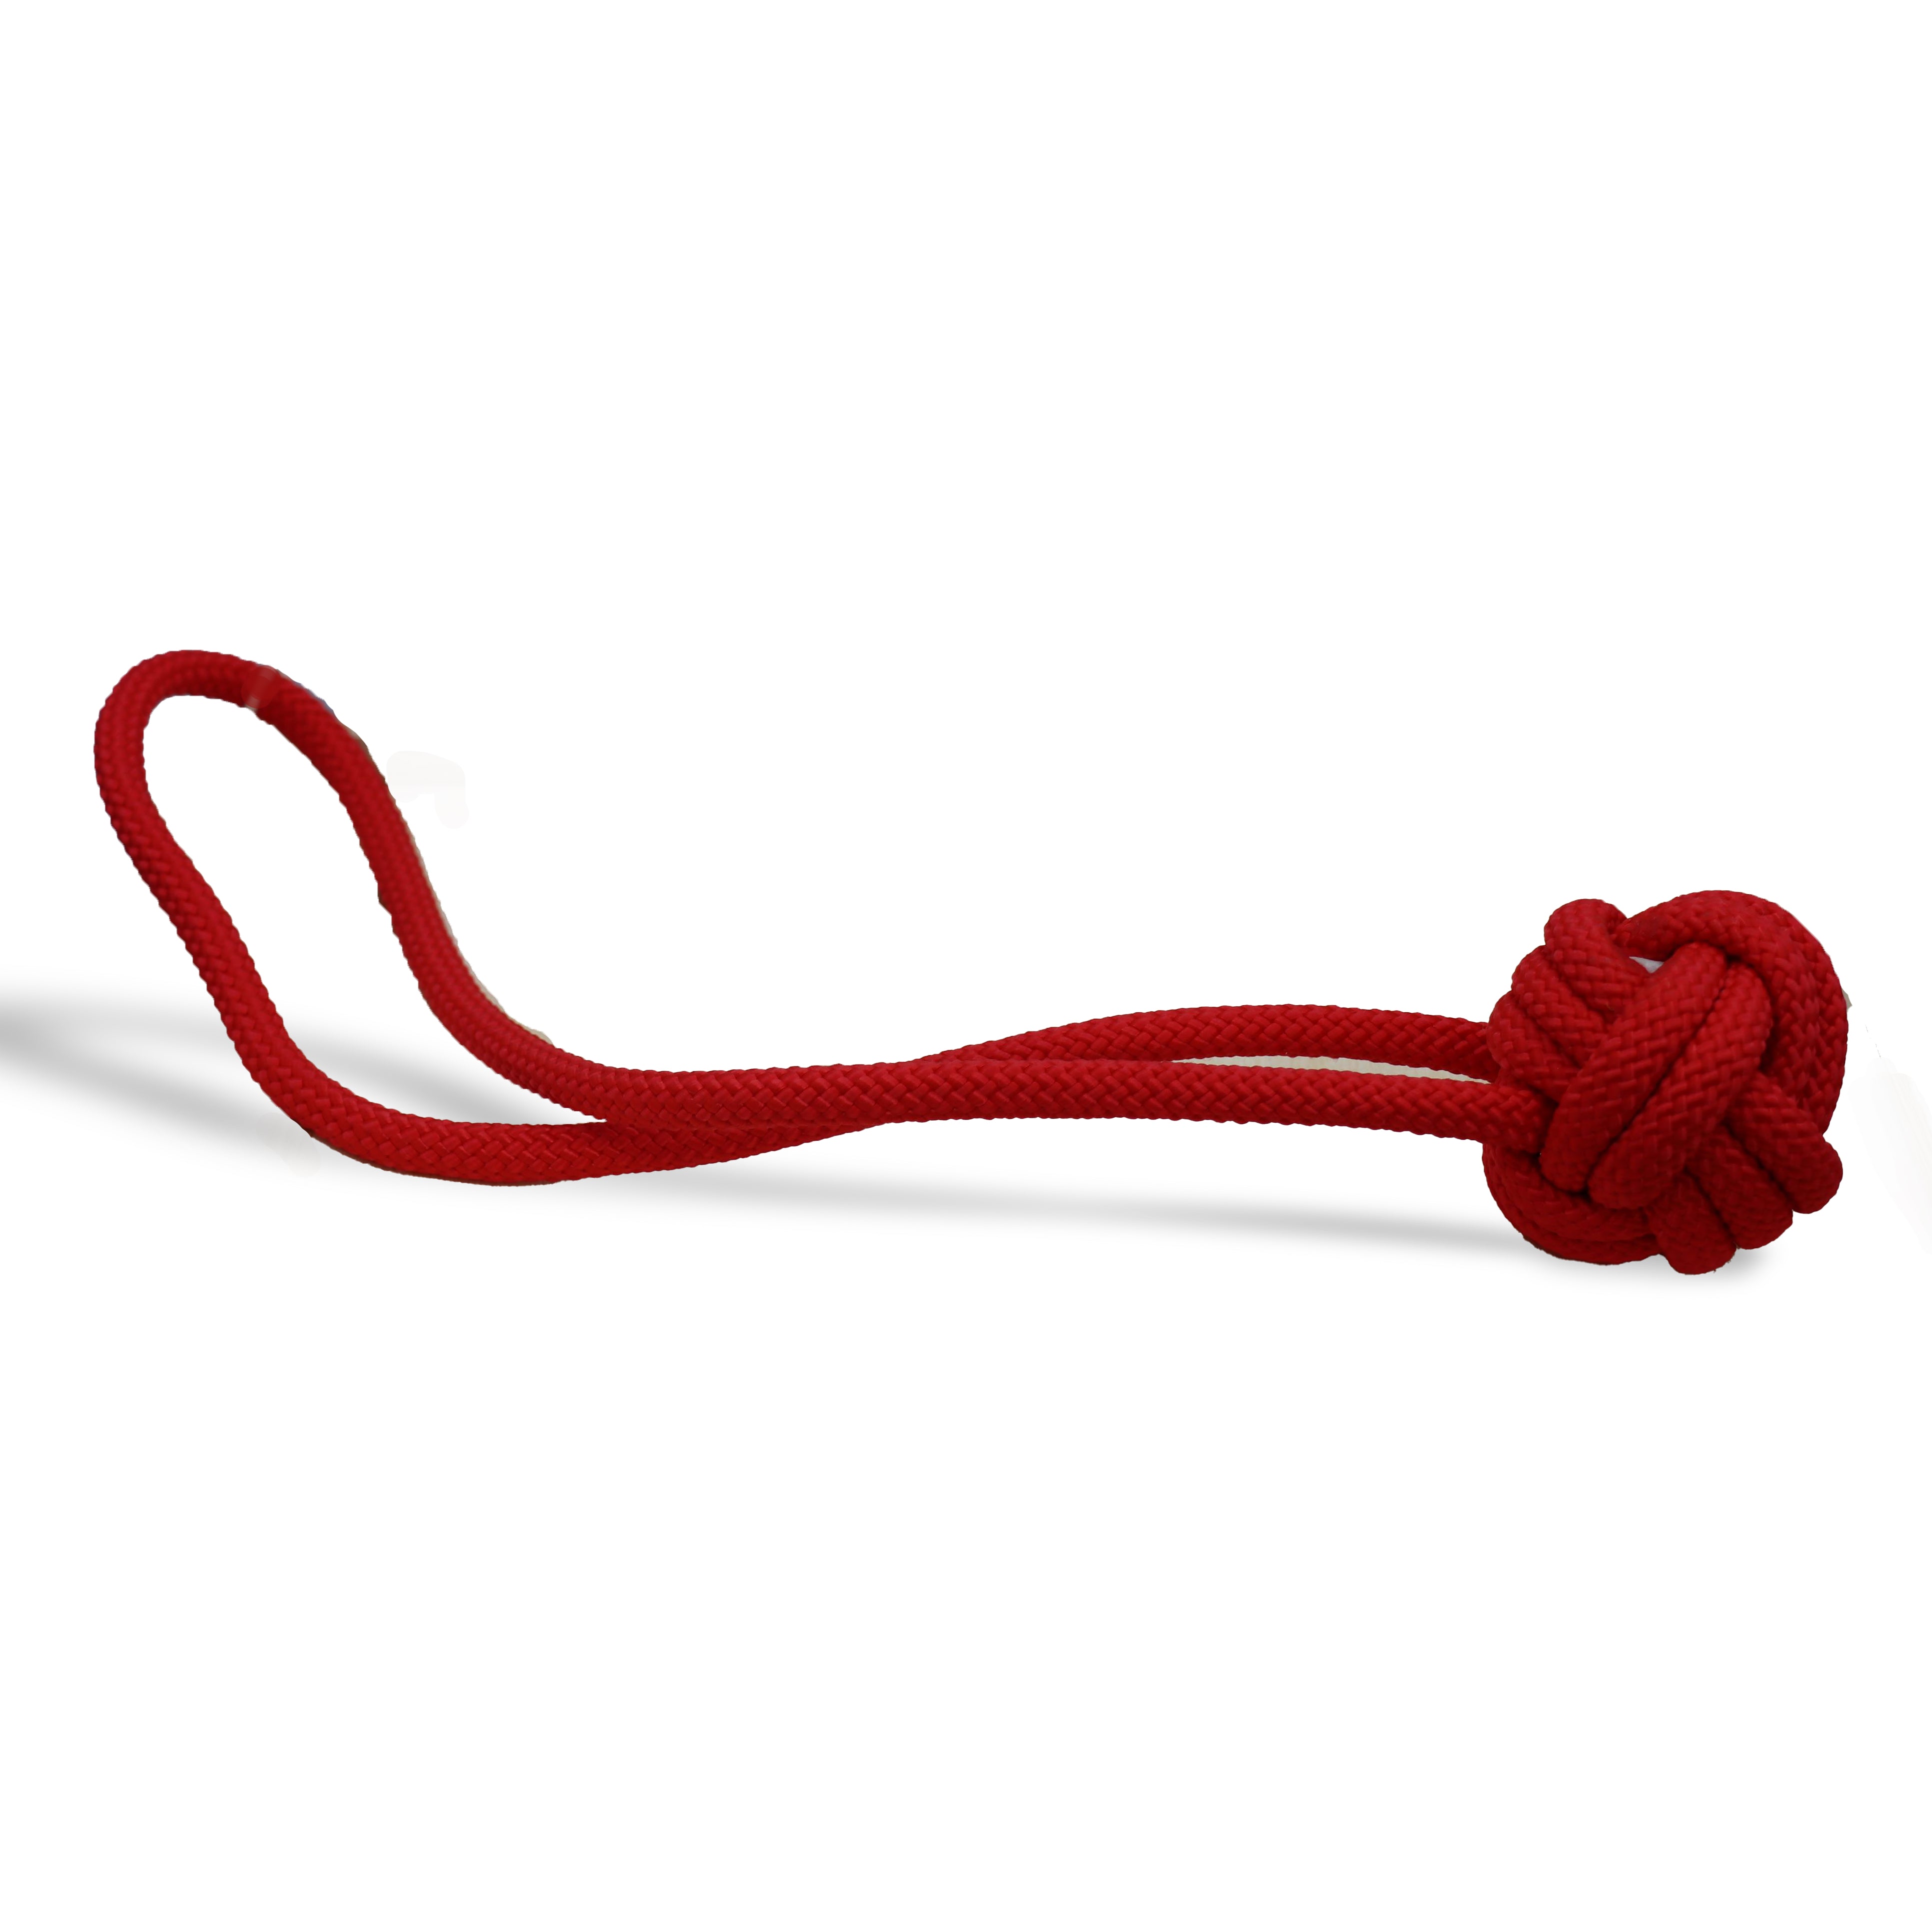 Monkey Knot Pull Toy